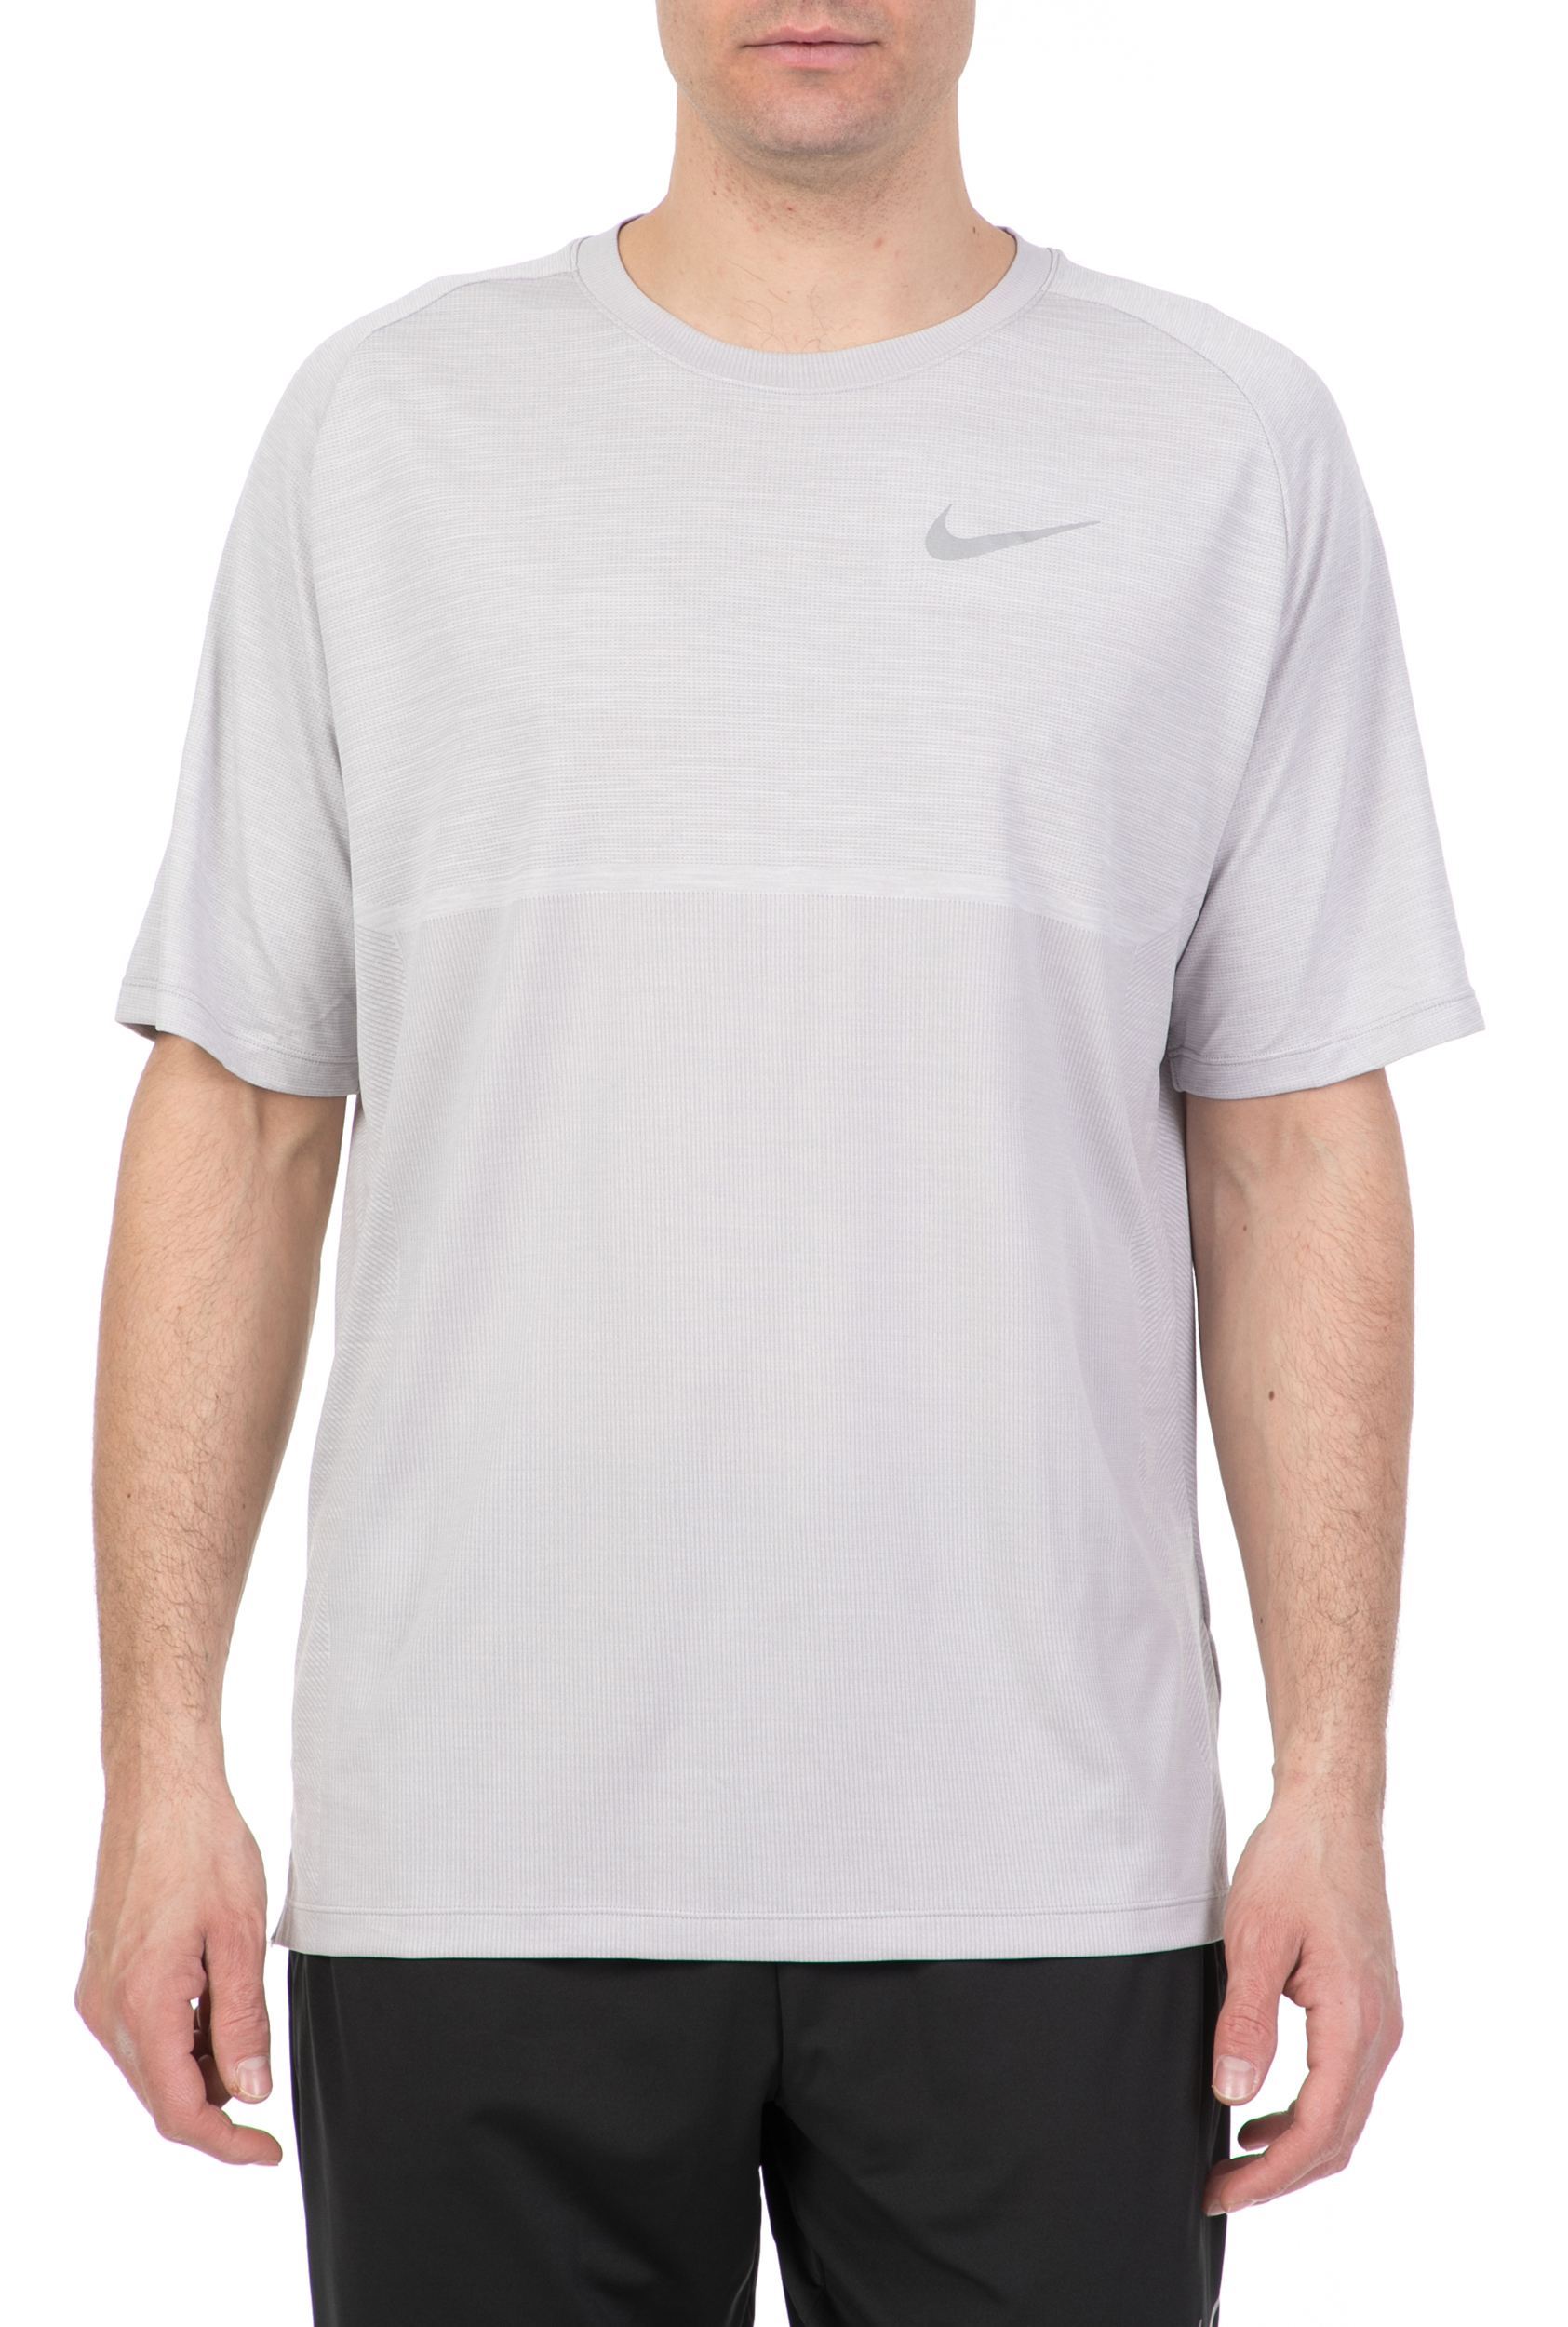 NIKE - Ανδρική κοντομάνικη μπλούζα Nike DRY MEDALIST TOP SS γκρι Ανδρικά/Ρούχα/Αθλητικά/T-shirt